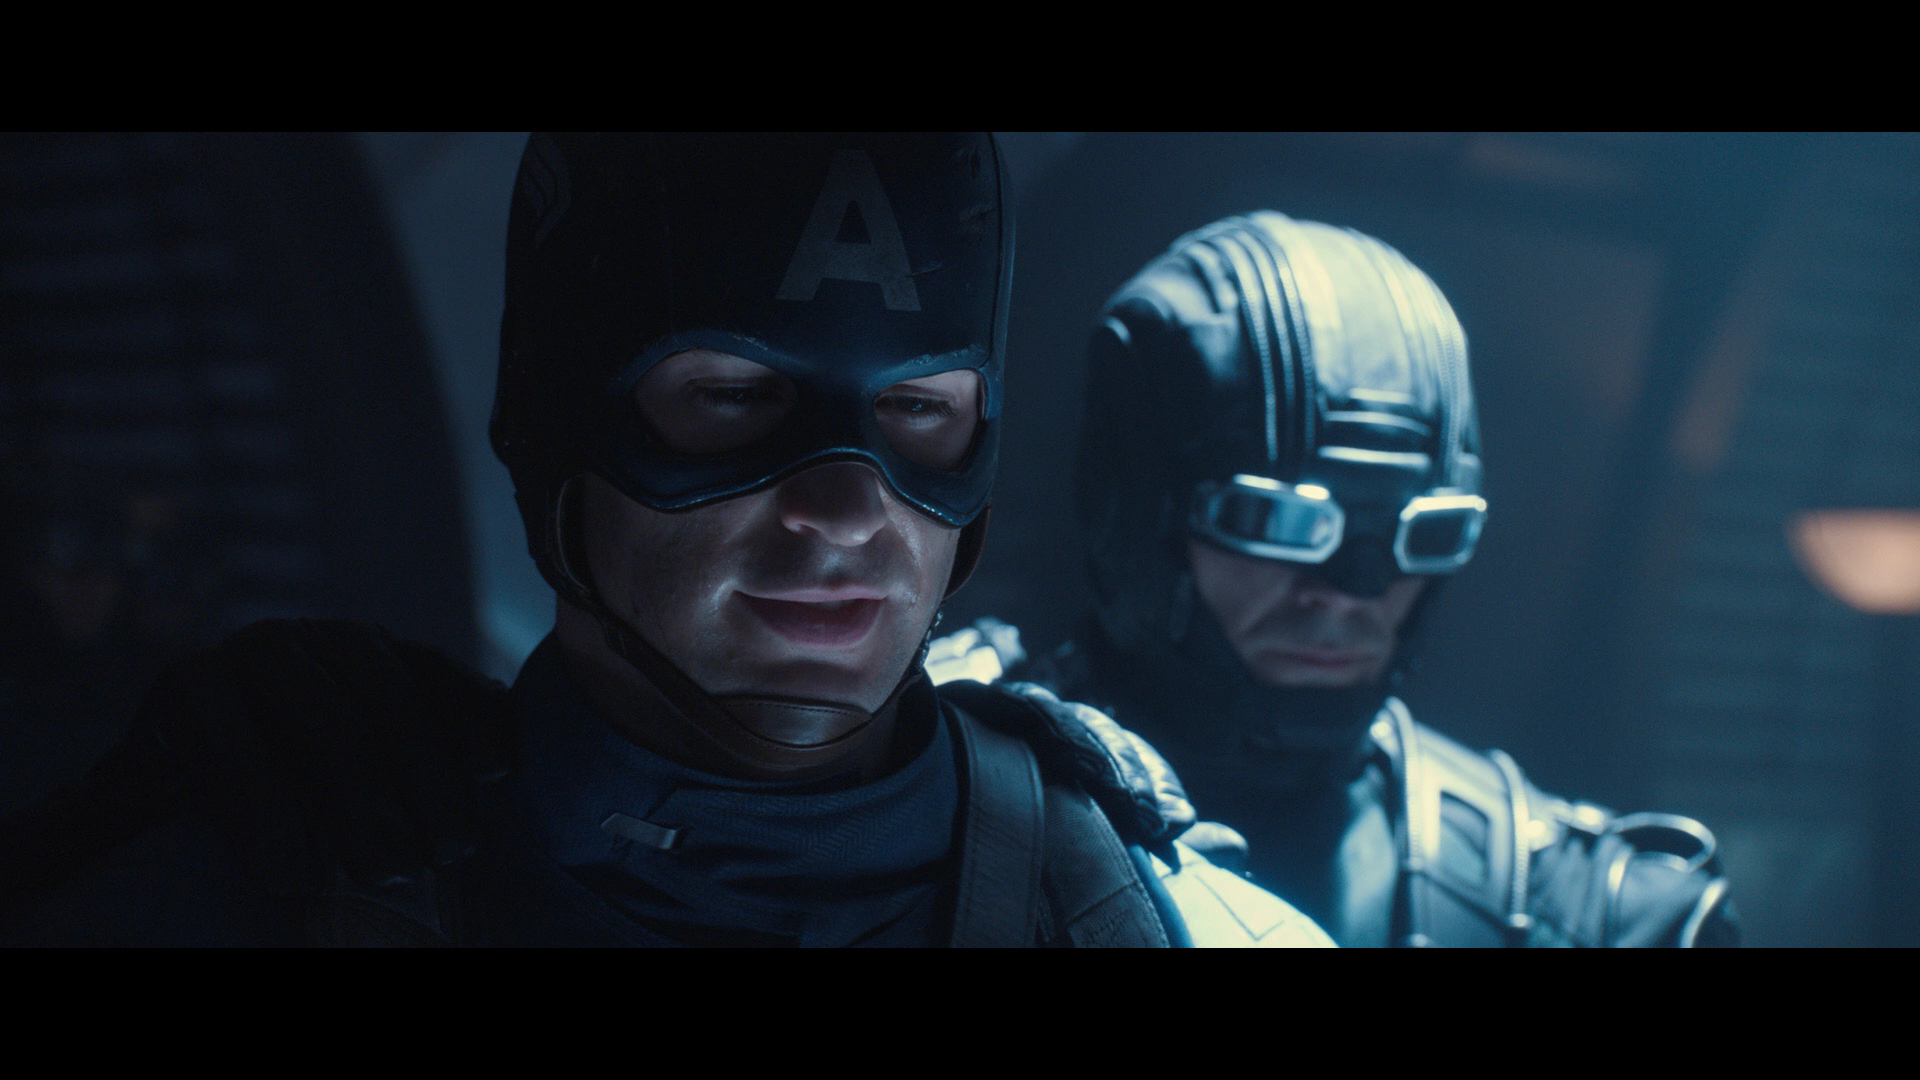 [美国队长1].Captain.America.The.First.Avenger.2011.3D.BluRay.1080p.AVC.DTS-HD.MA.7.1-Sm07  42.73G-9.png